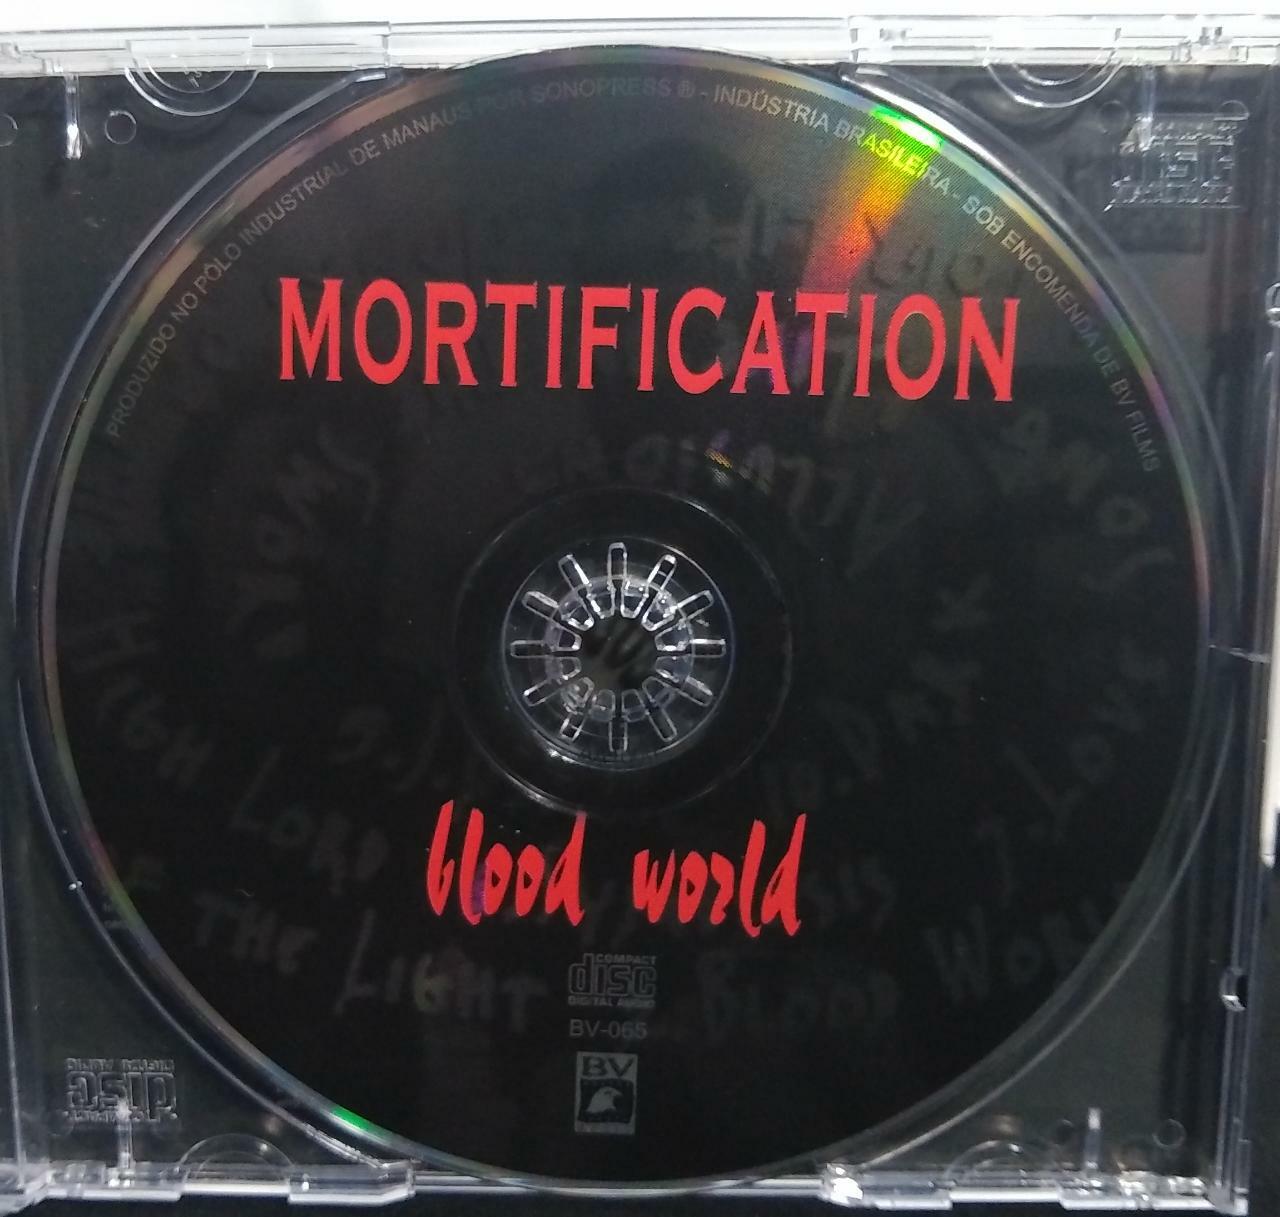 CD - Mortification - Blood World